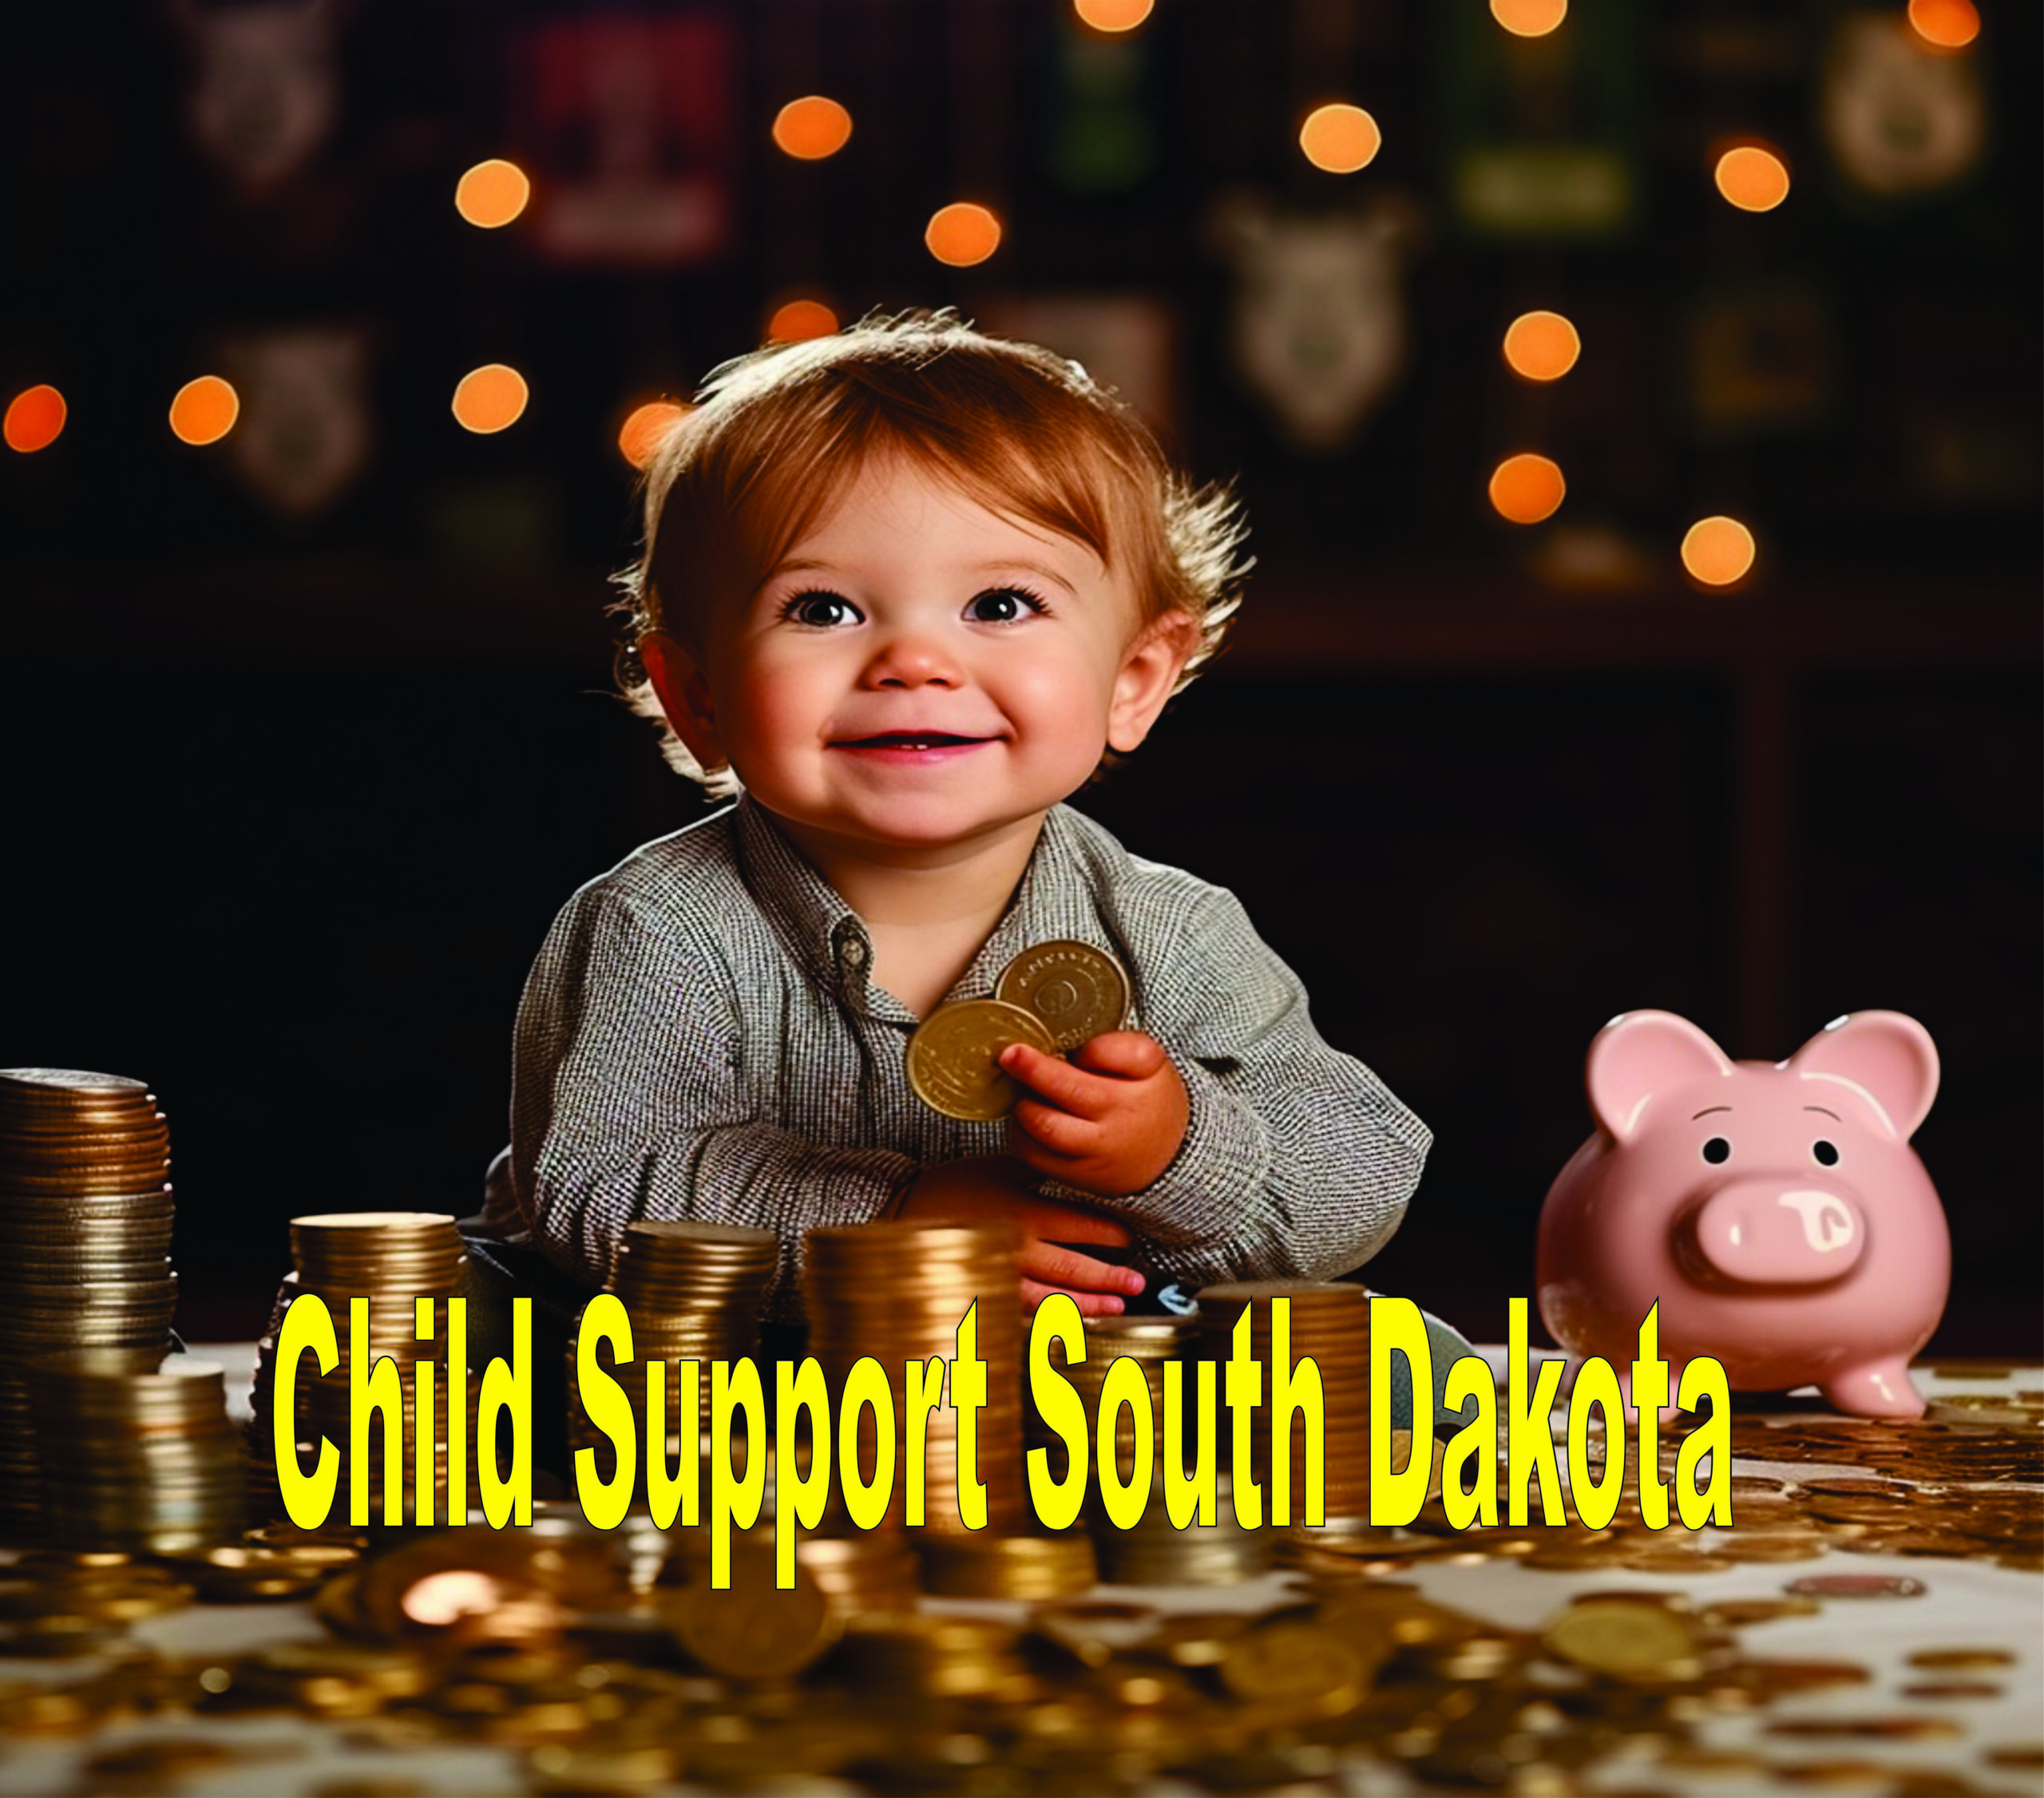 Child Support South Dakota